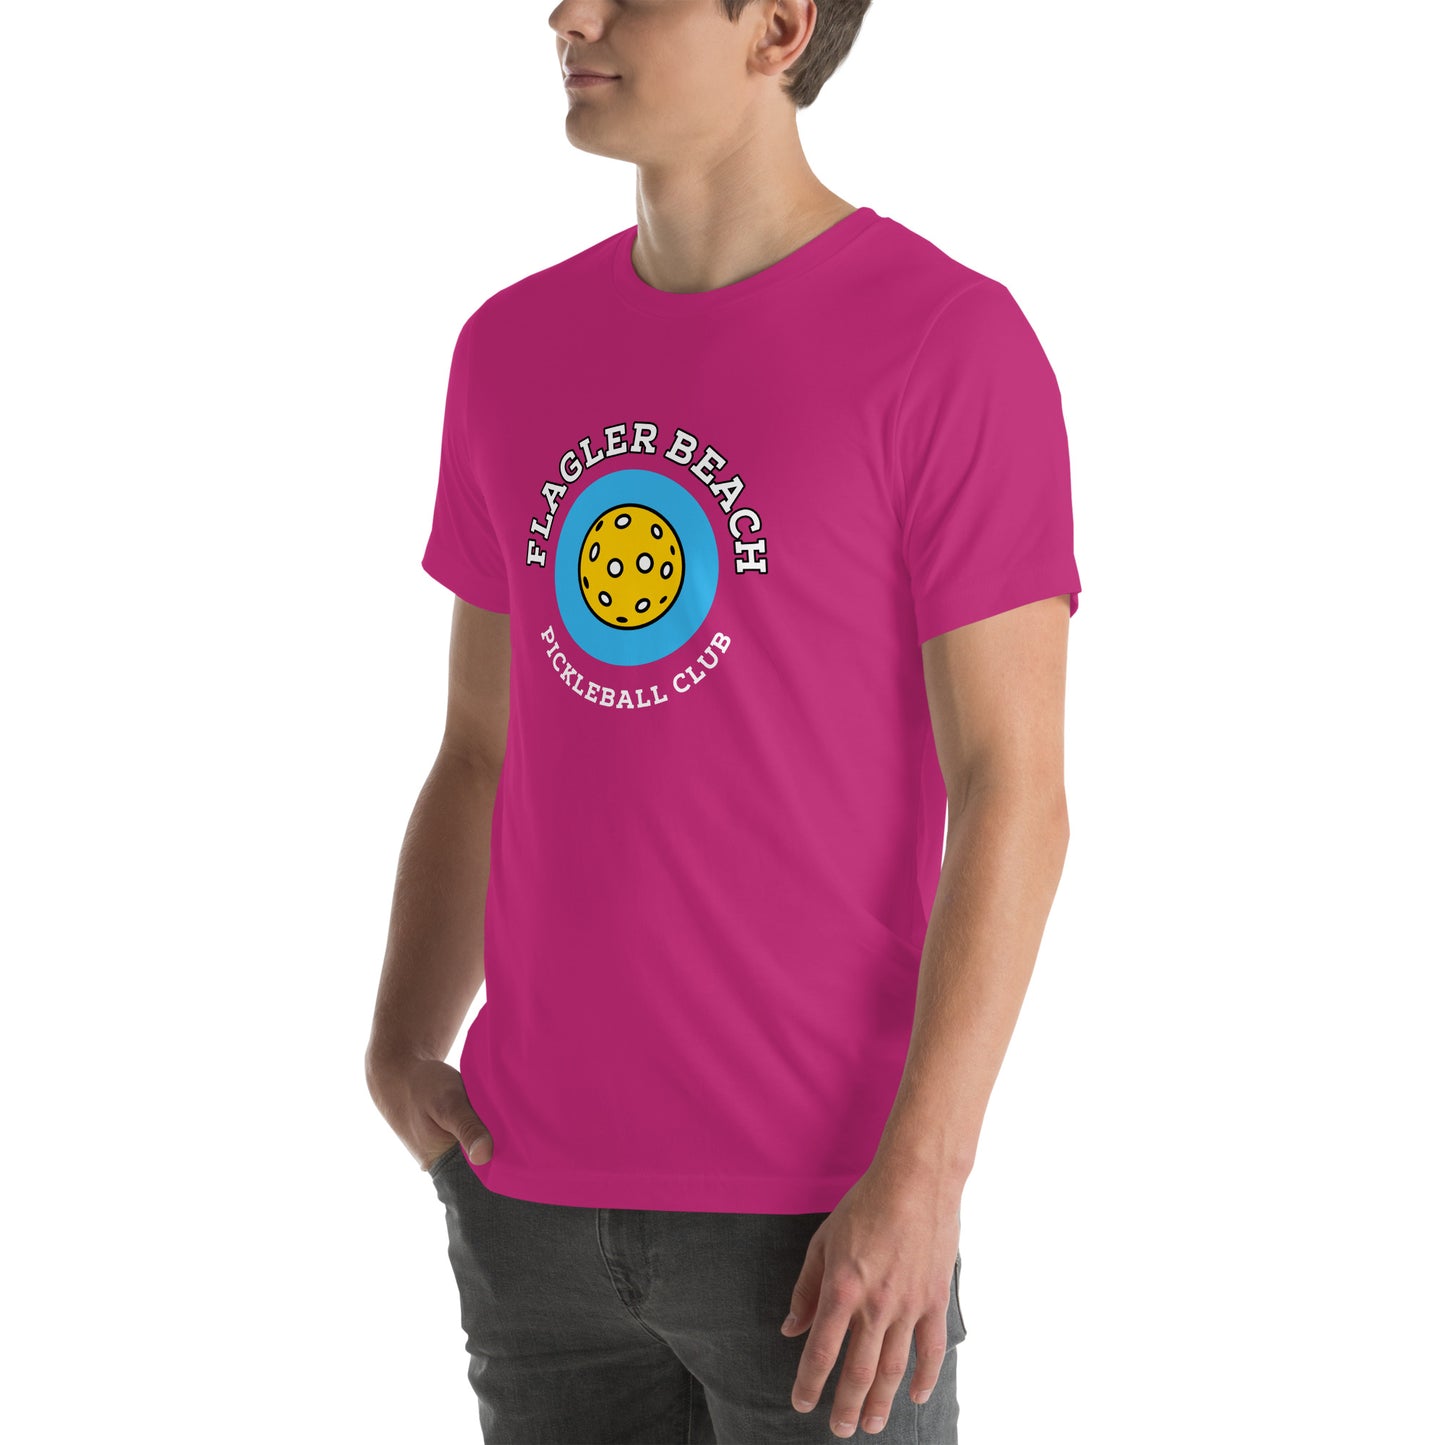 CLASSIC T-shirt : FLAGLER BEACH PICKLEBALL CLUB (more colors)